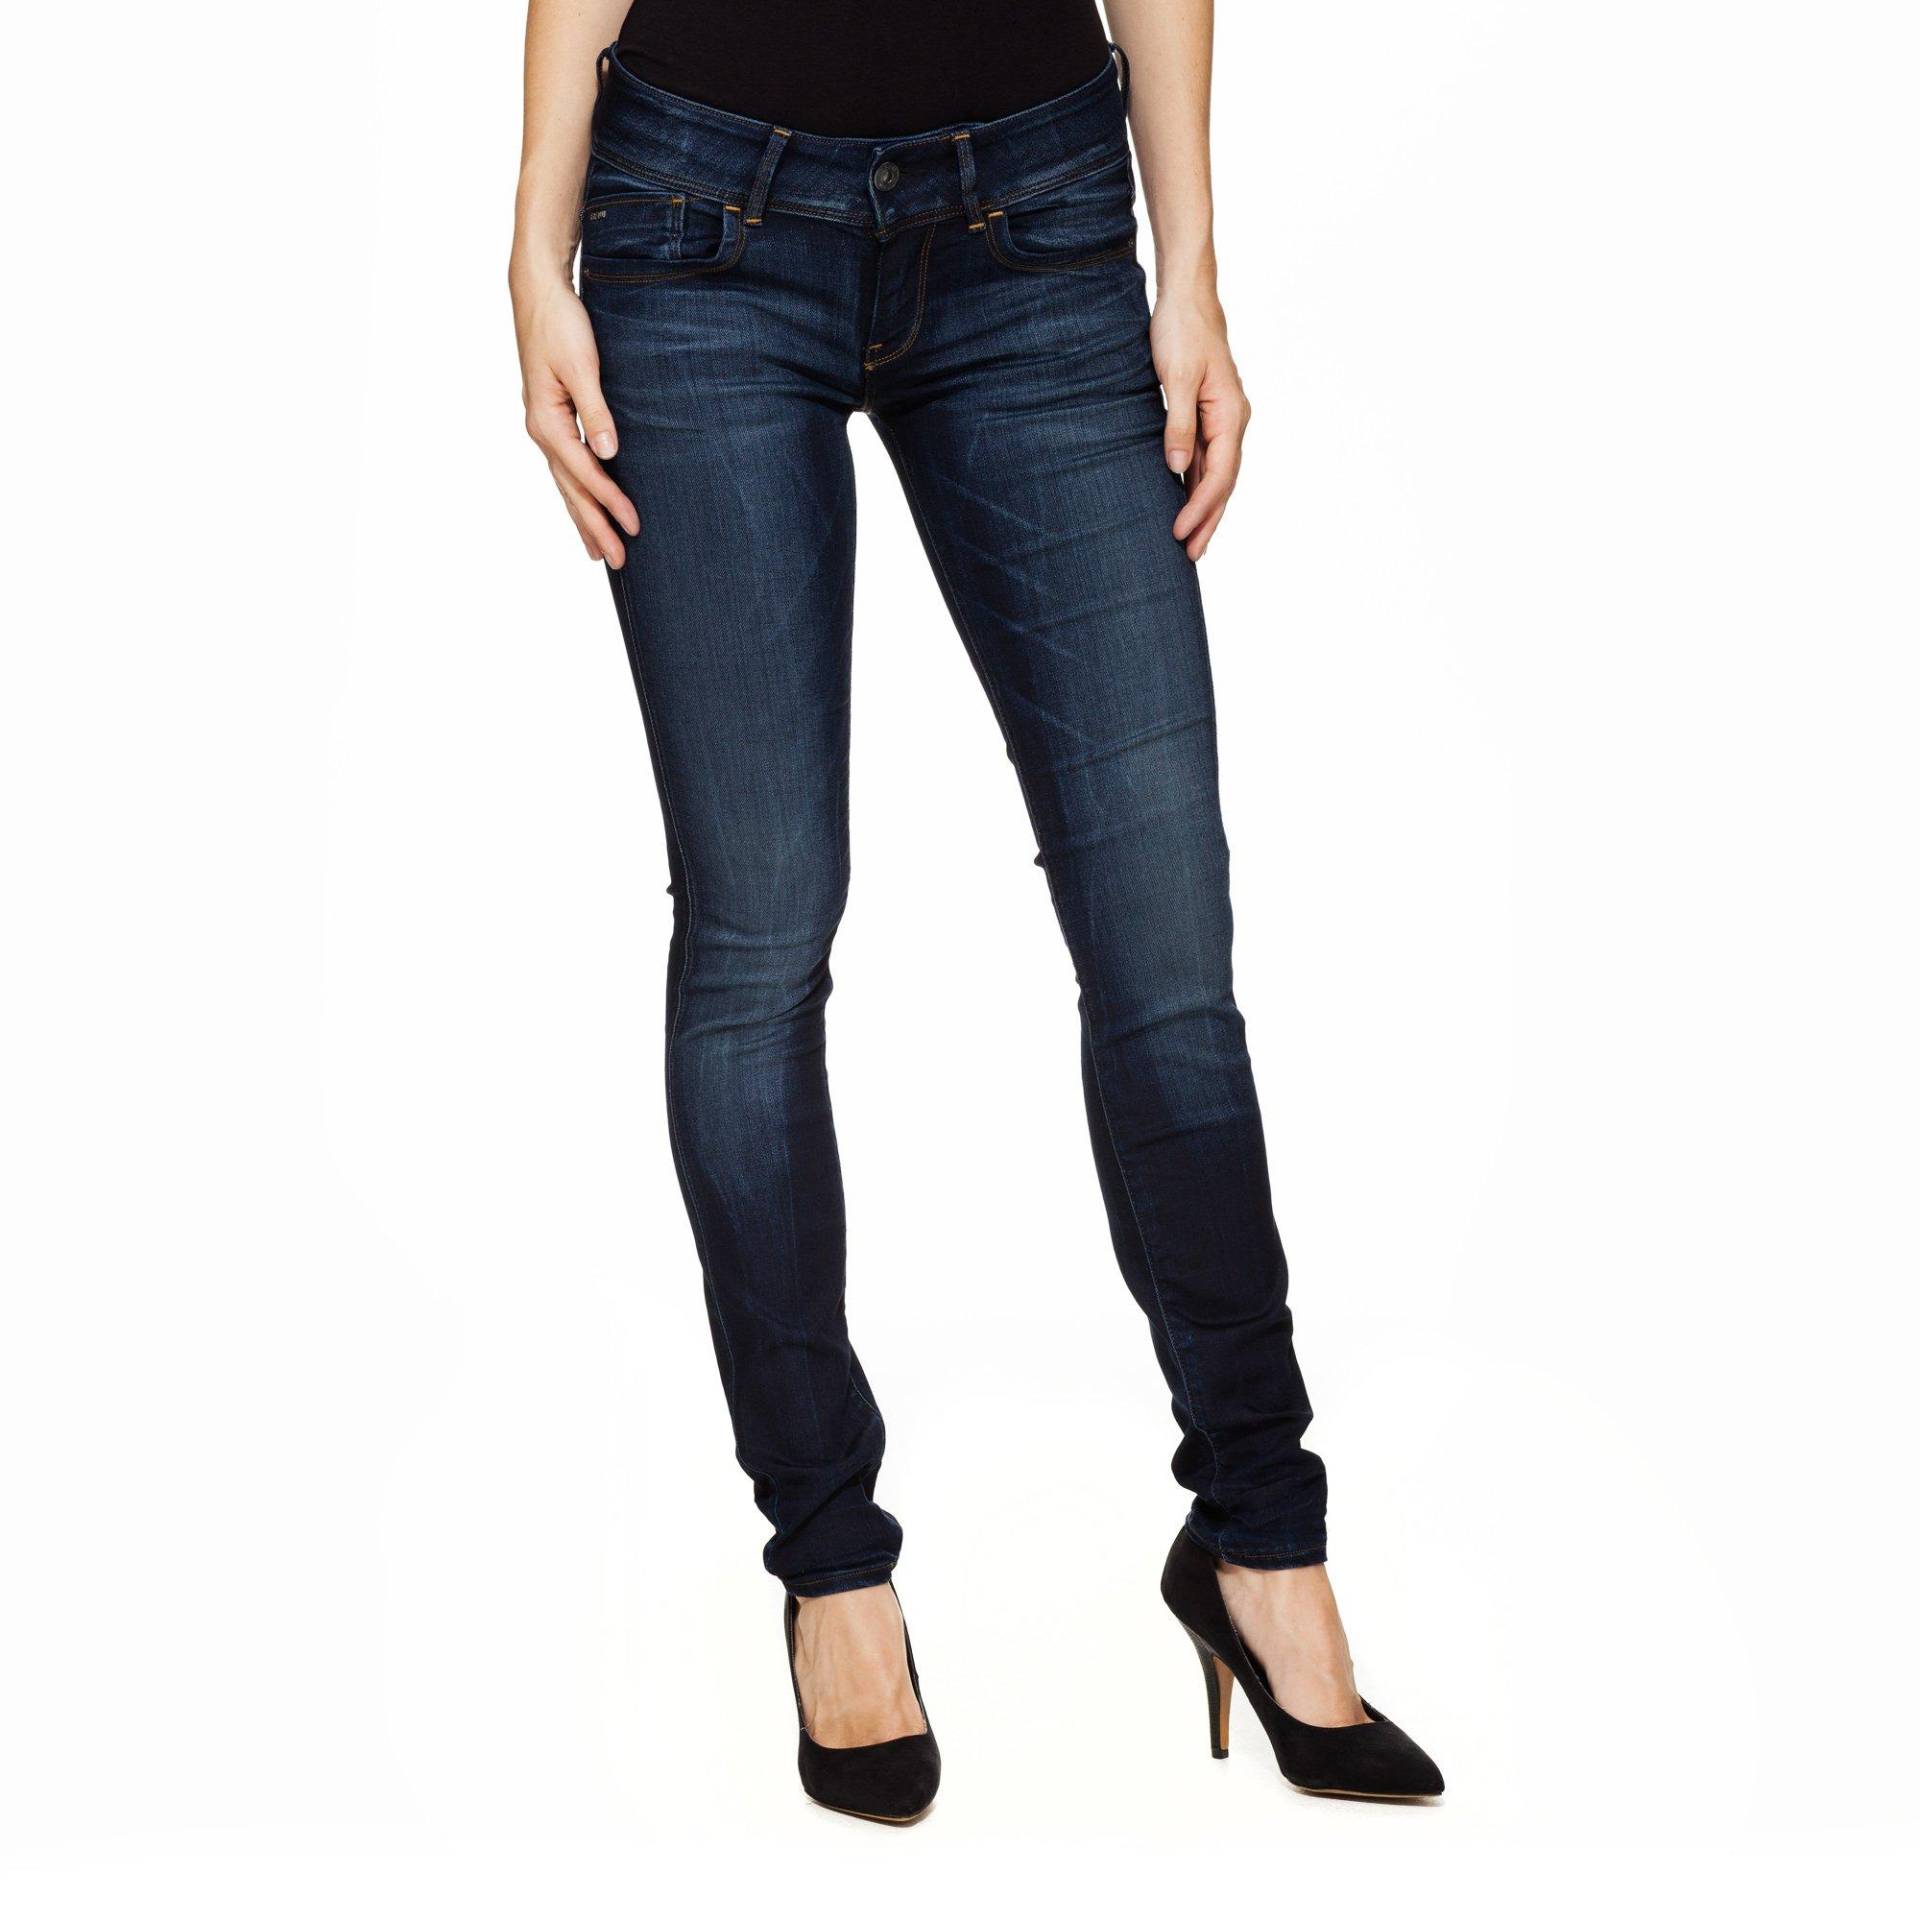 Jeans, Skinny Fit Damen Blau Denim W30 von G-STAR